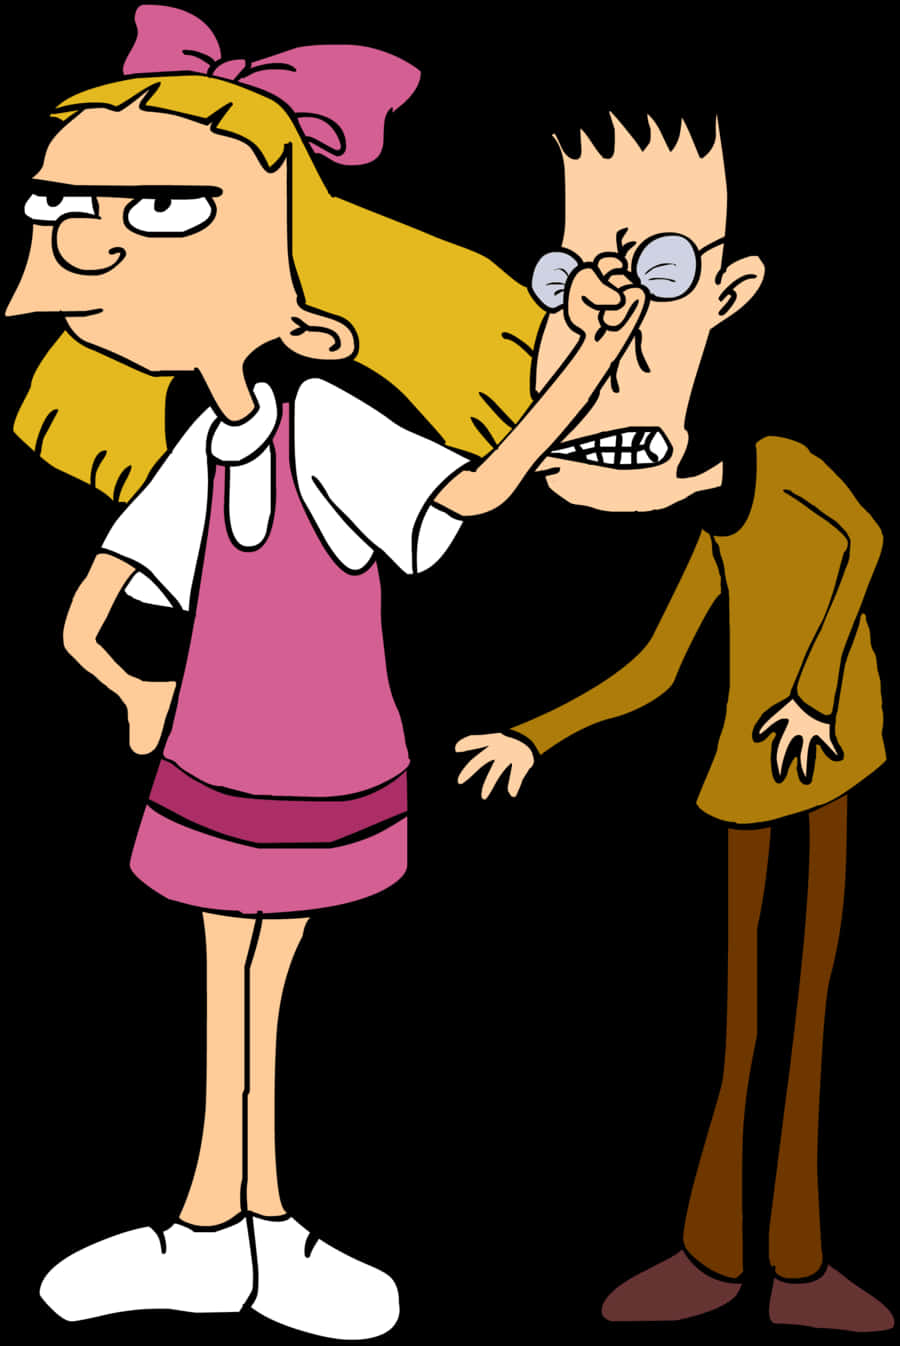 Cartoon A Cartoon Of A Man And A Woman